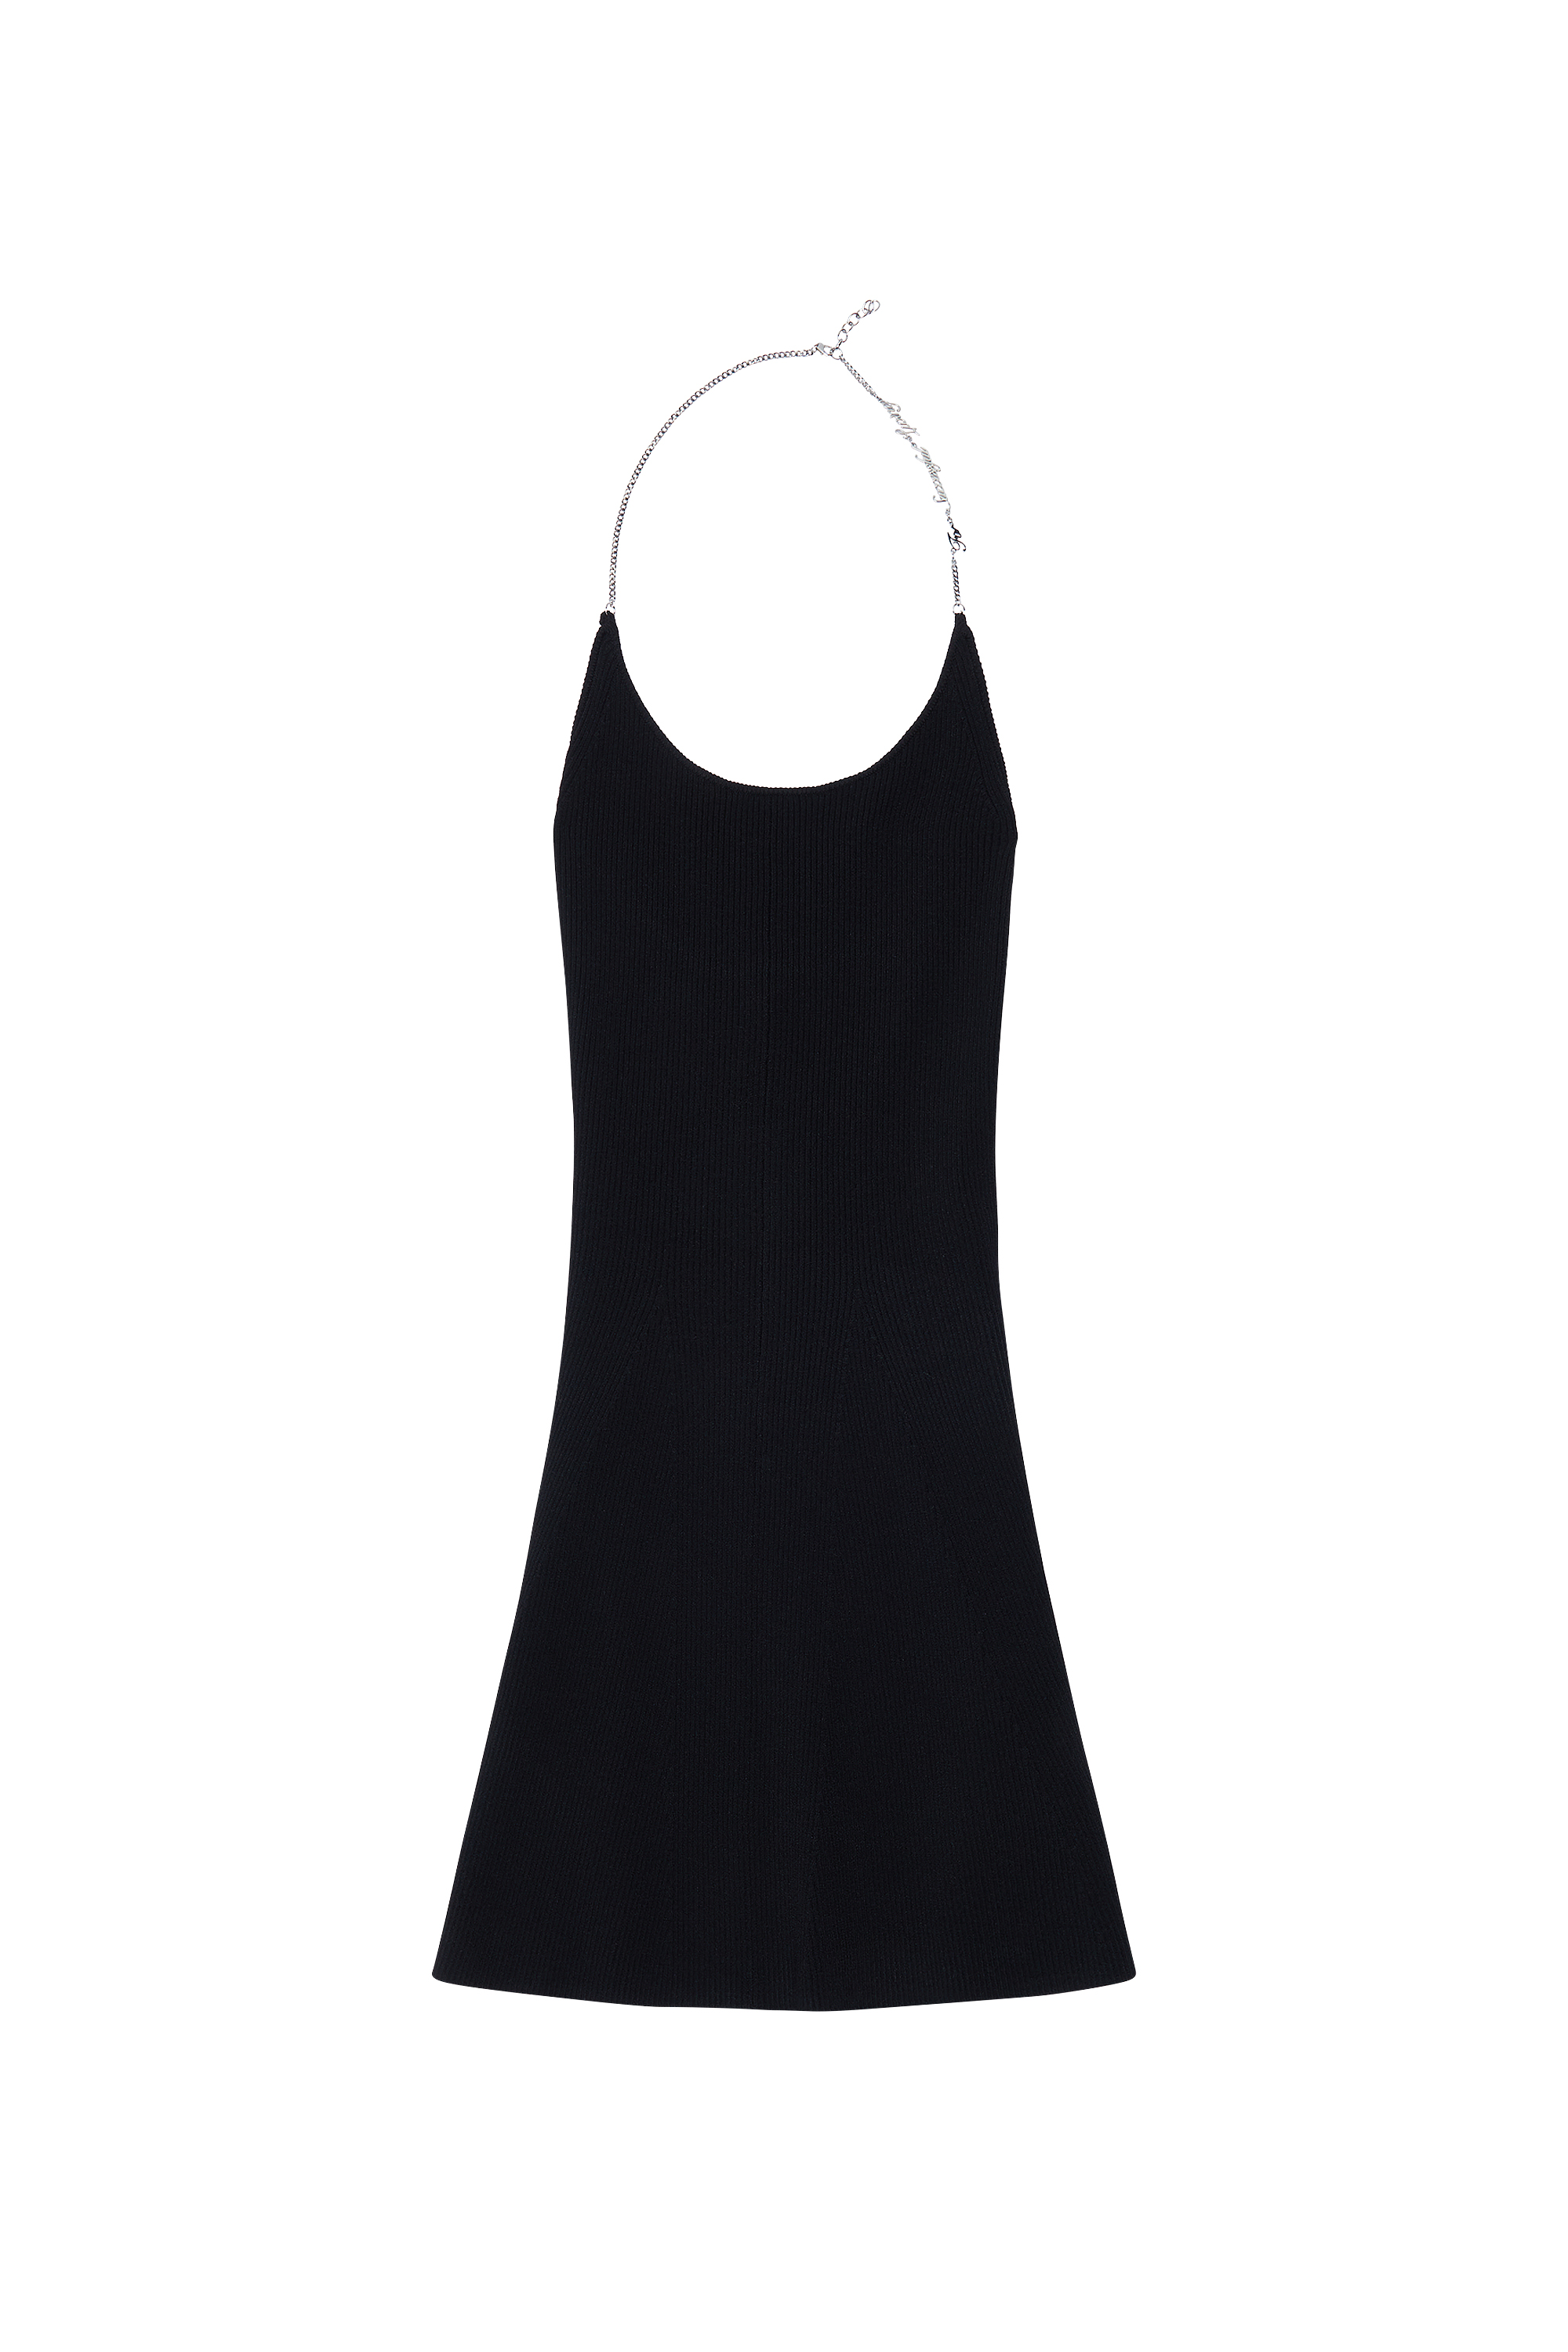 Diesel - M-ARLETTE, Woman Chain-halterneck dress in stretch knit in Black - Image 2